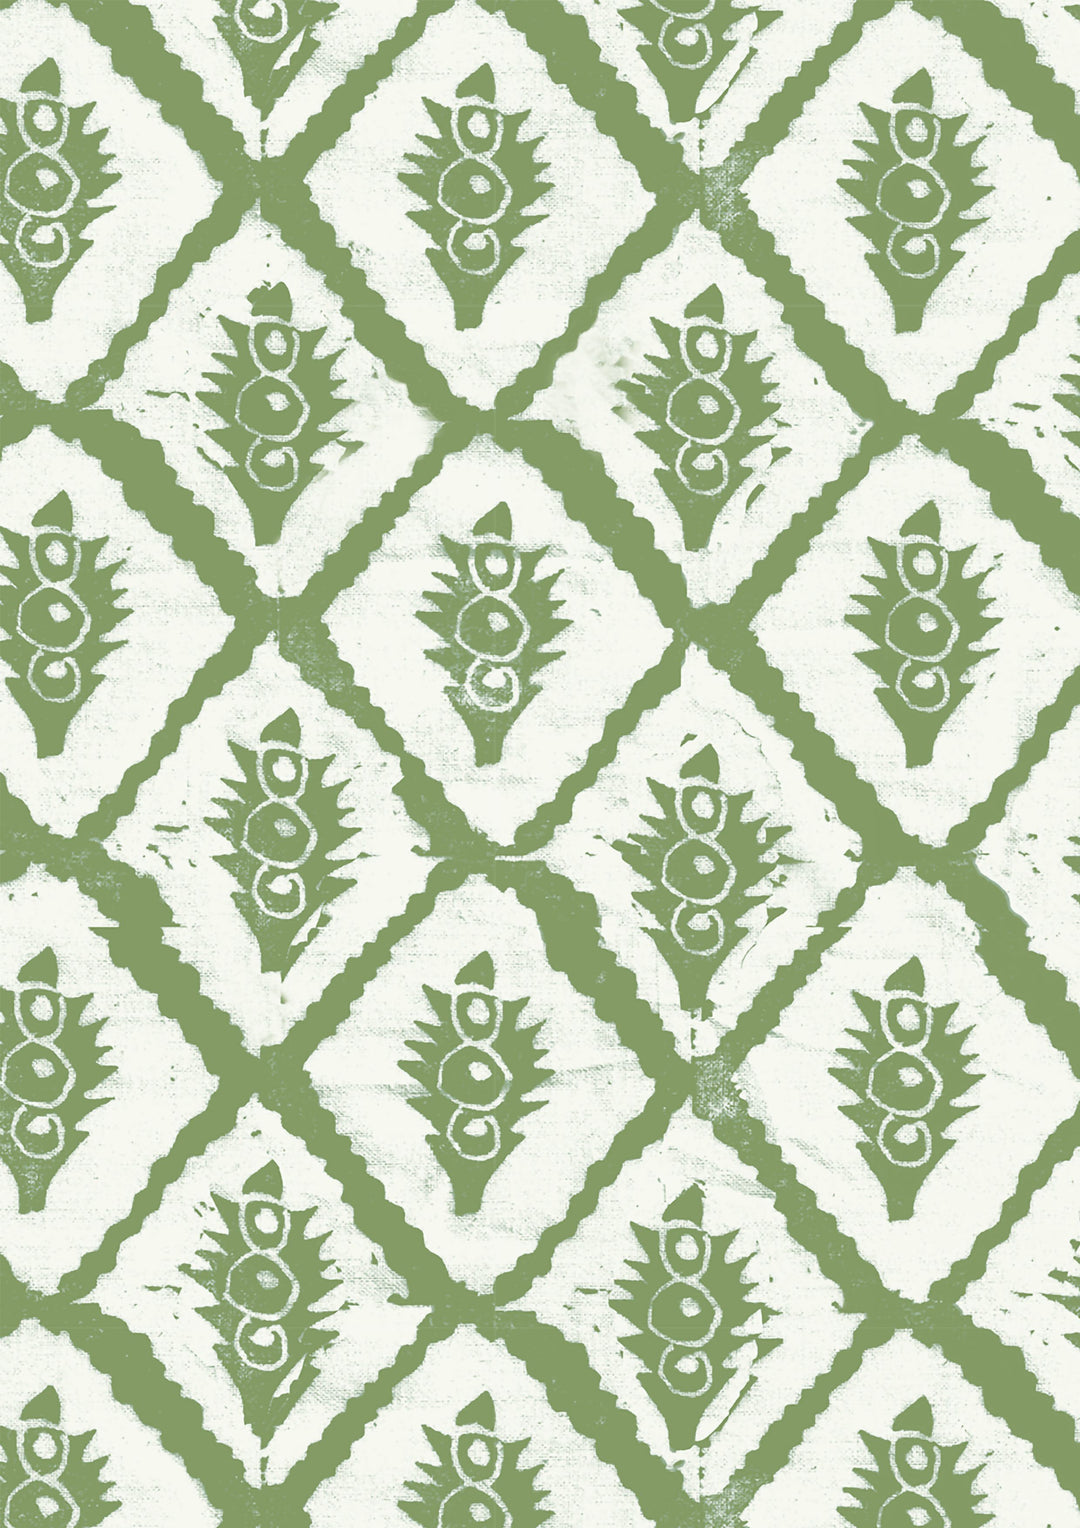 annika-reed-studio-jaipur-design-wallpaper-green-hand-block-printed-repeat-pattern-white-background